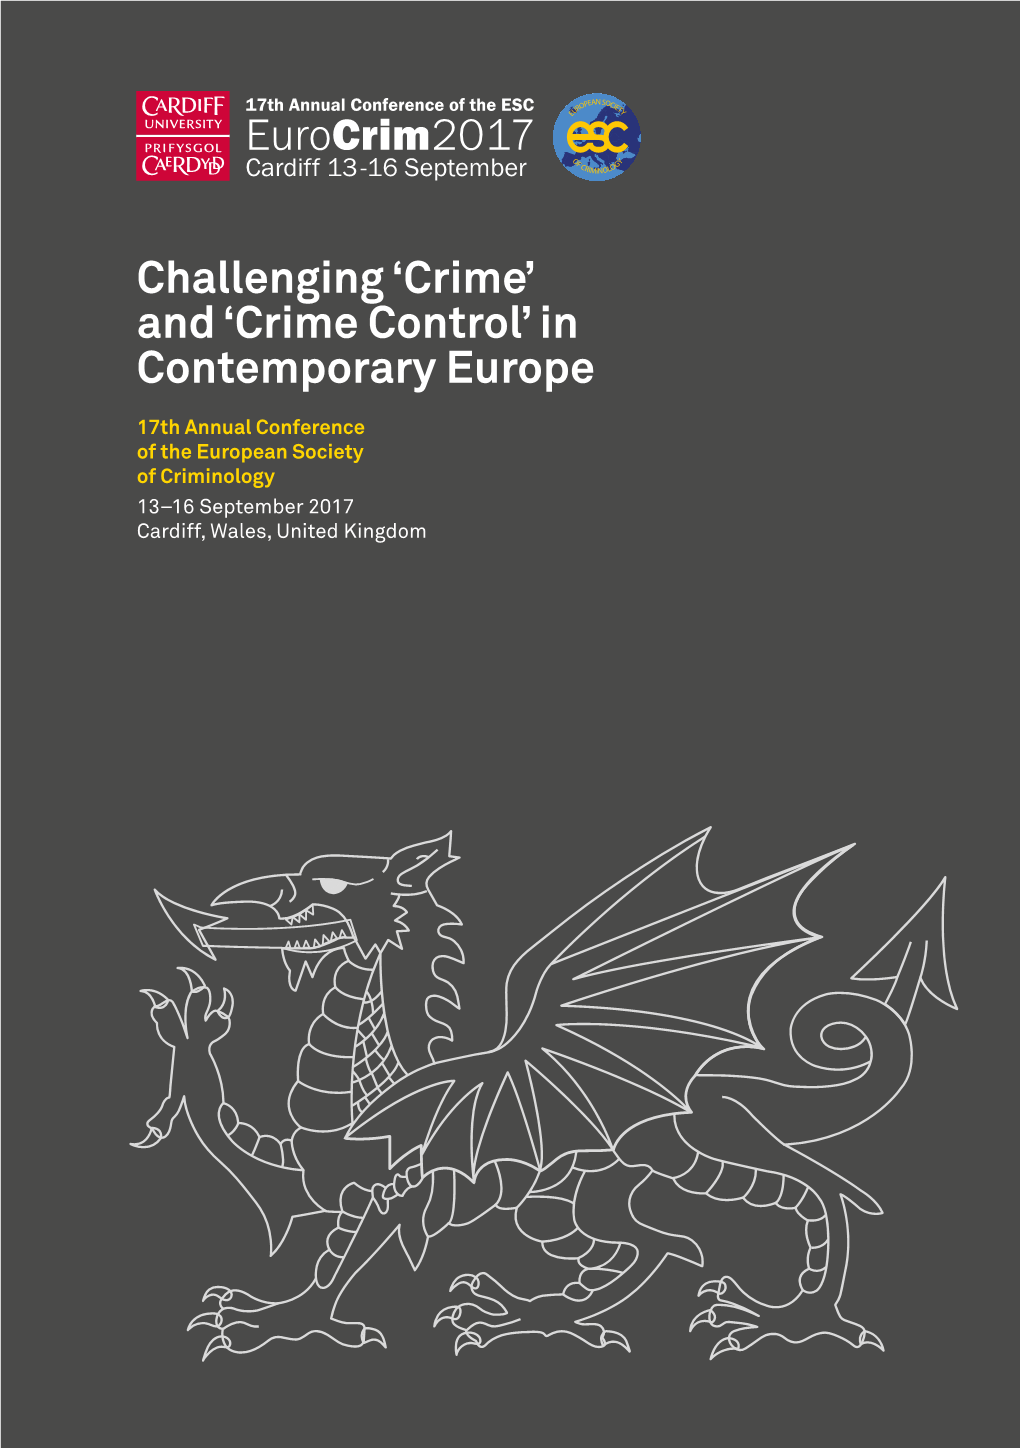 'Crime Control' in Contemporary Europe